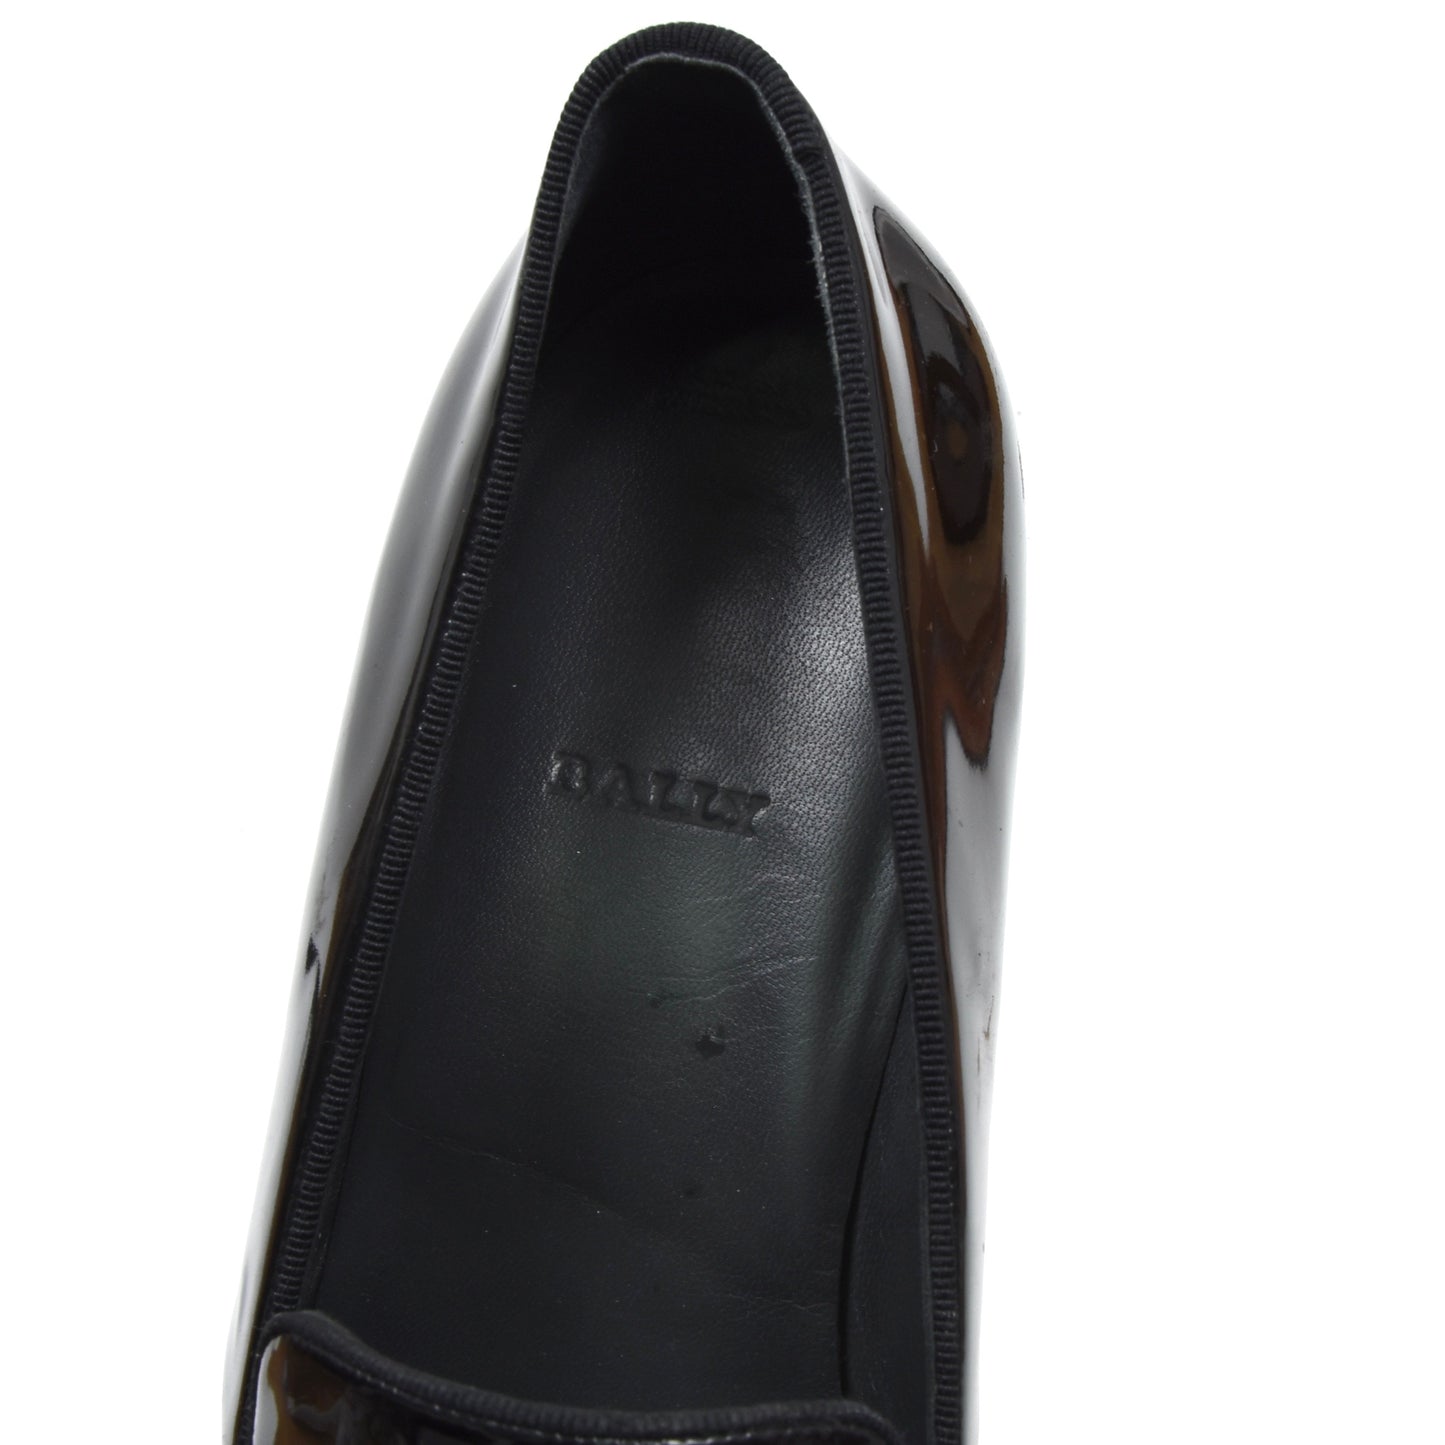 Bally Patent Leather Tuxedo Loafers Size EU 11/US 12 - Black